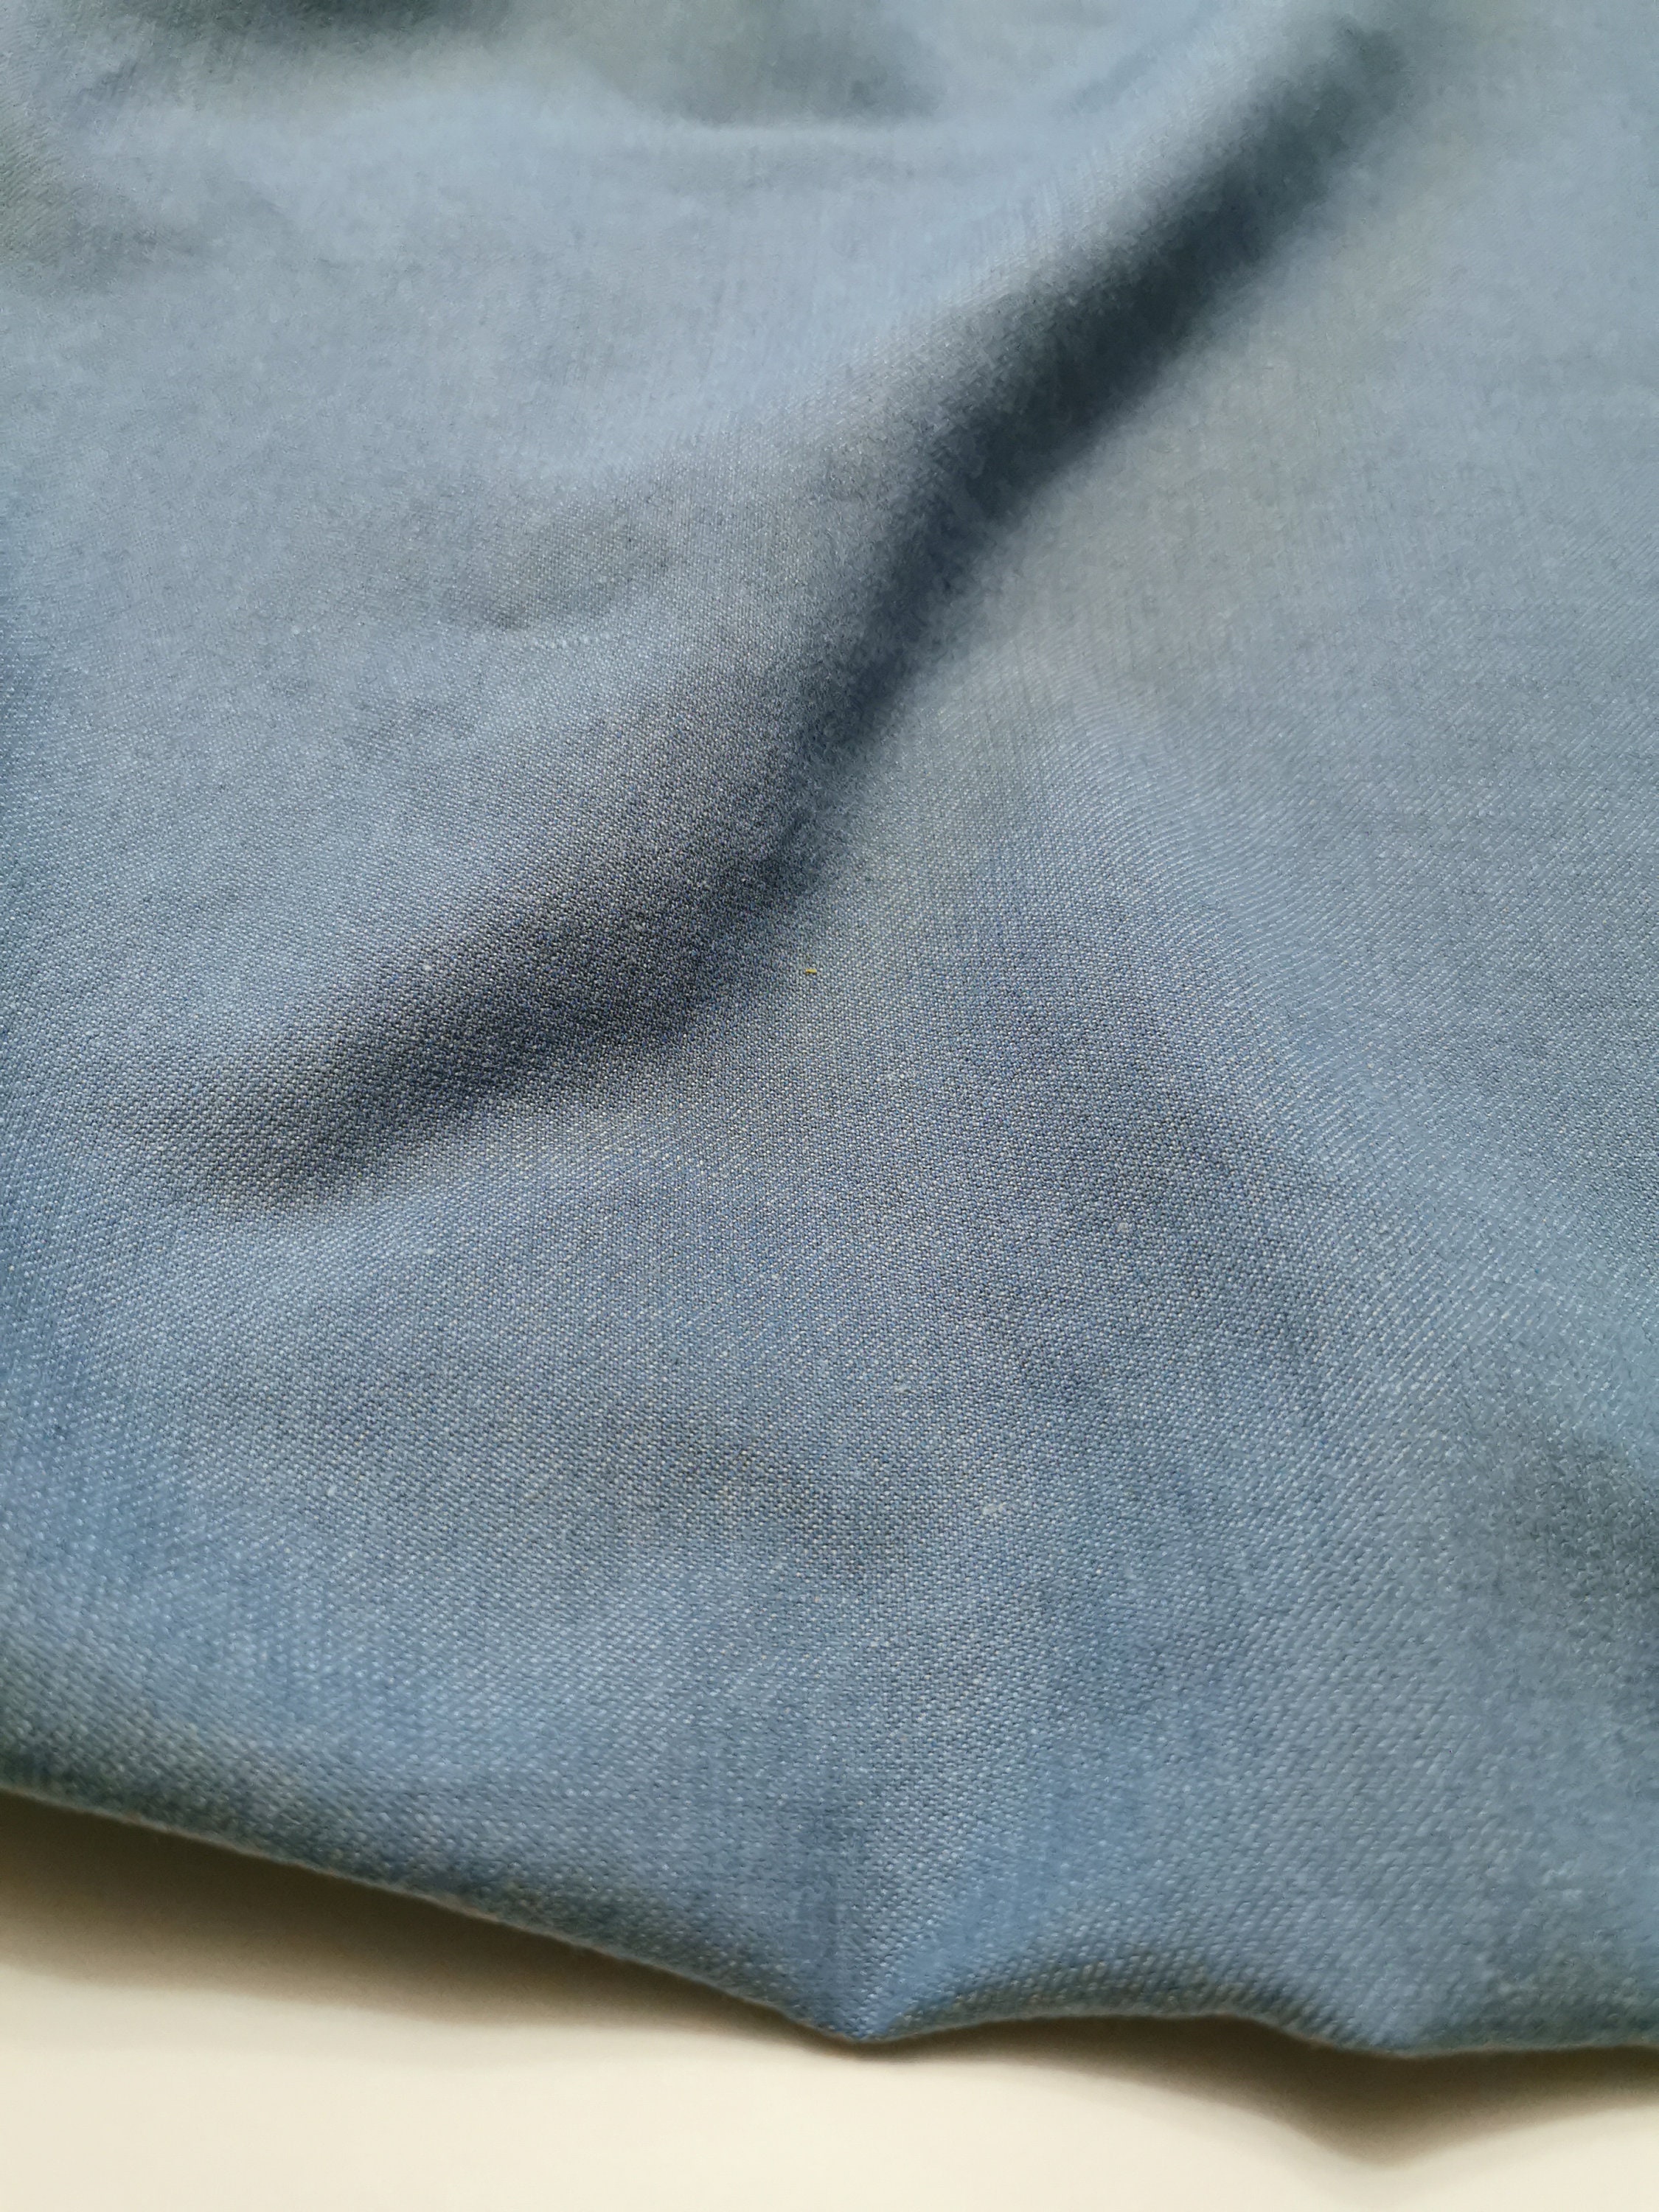 Softened linen cotton wool blend fabric medium weight sky | Etsy